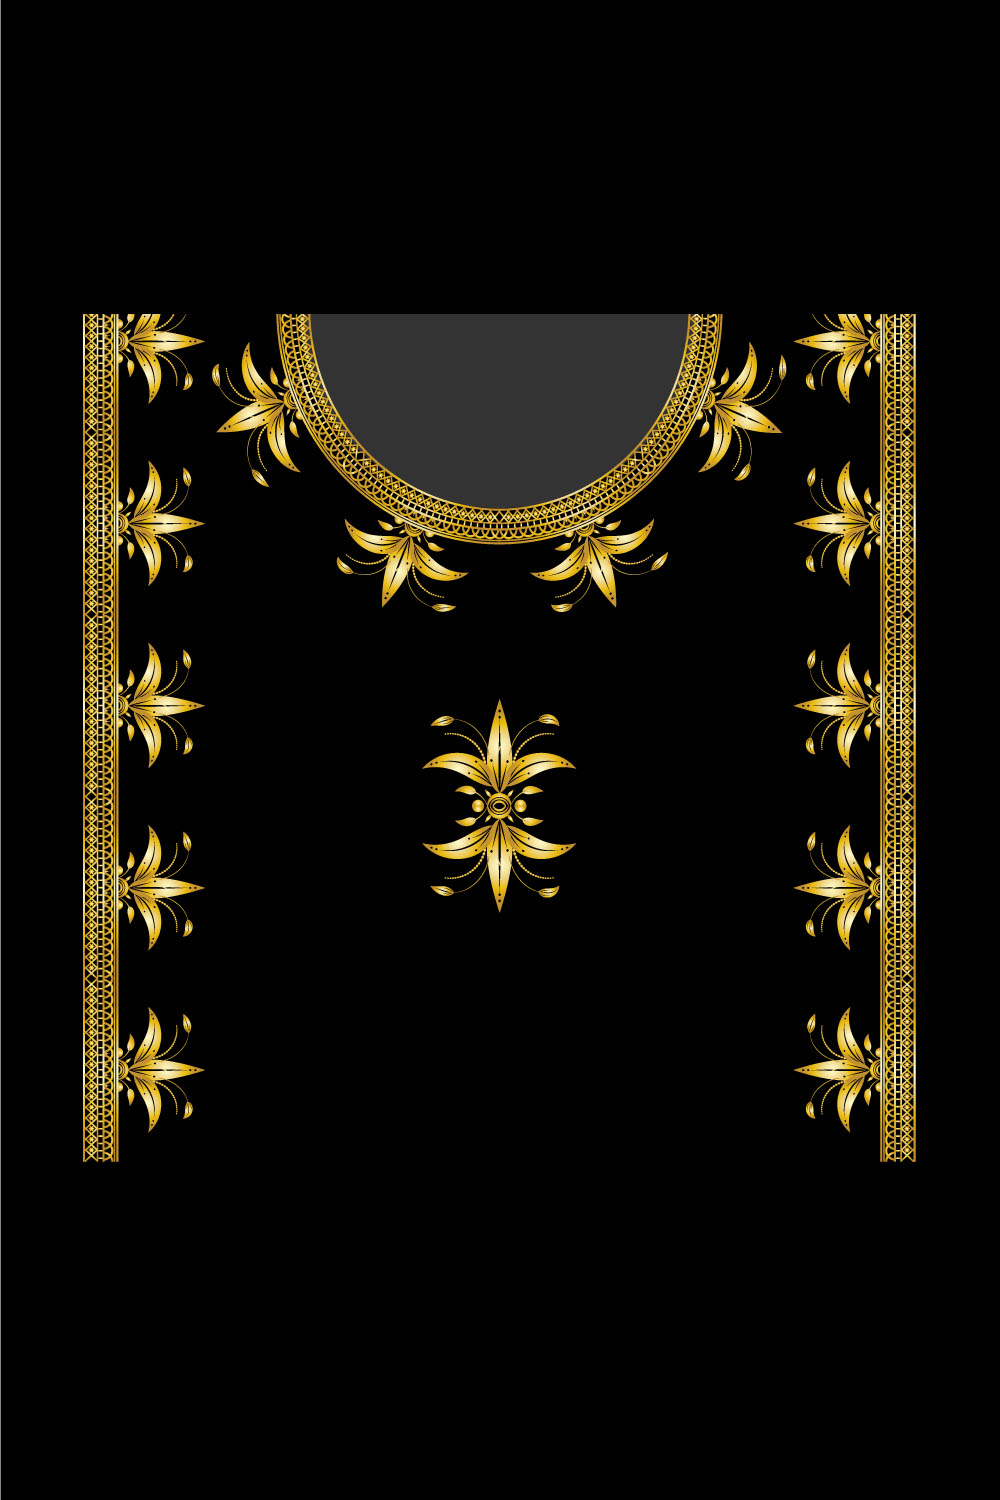 Golden Neck Ornament Frame Design Vector pinterest image.